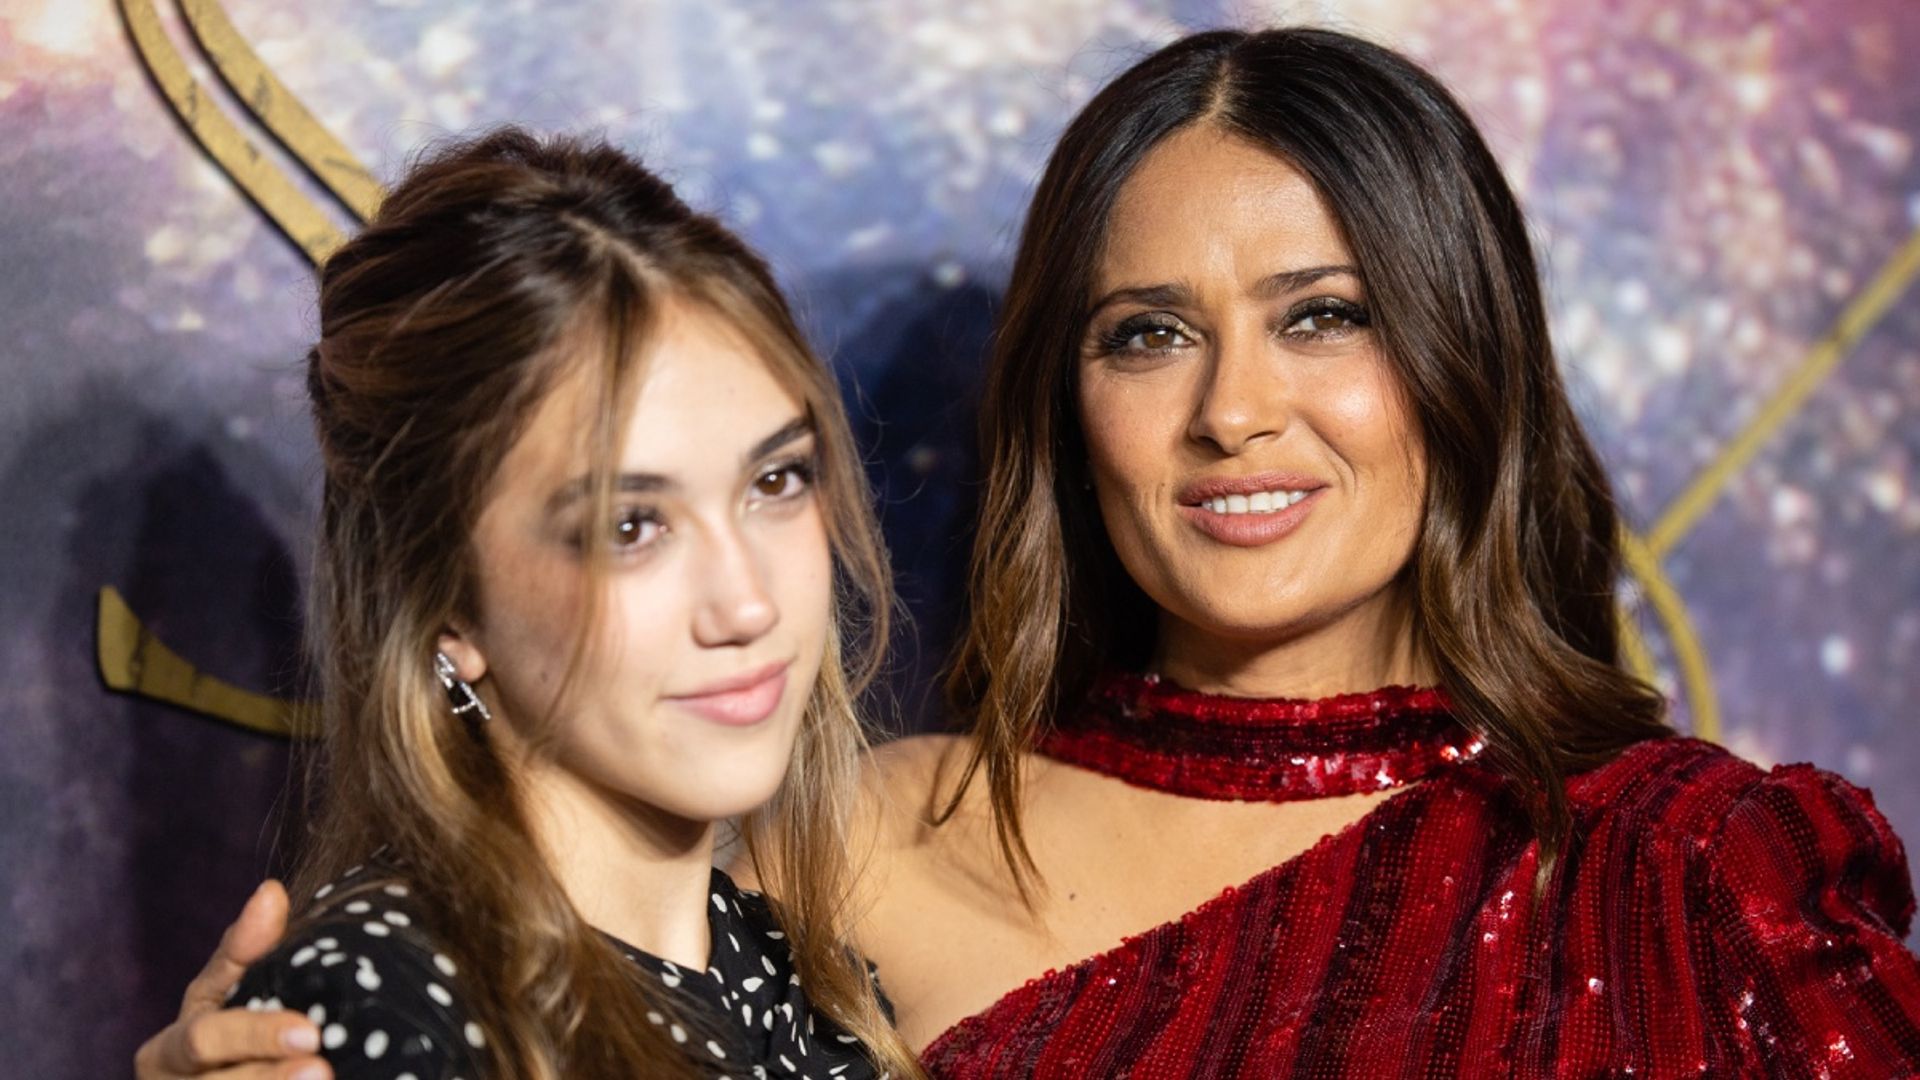 Salma Hayek shares stunning new photographs with lookalike daughter Valentina